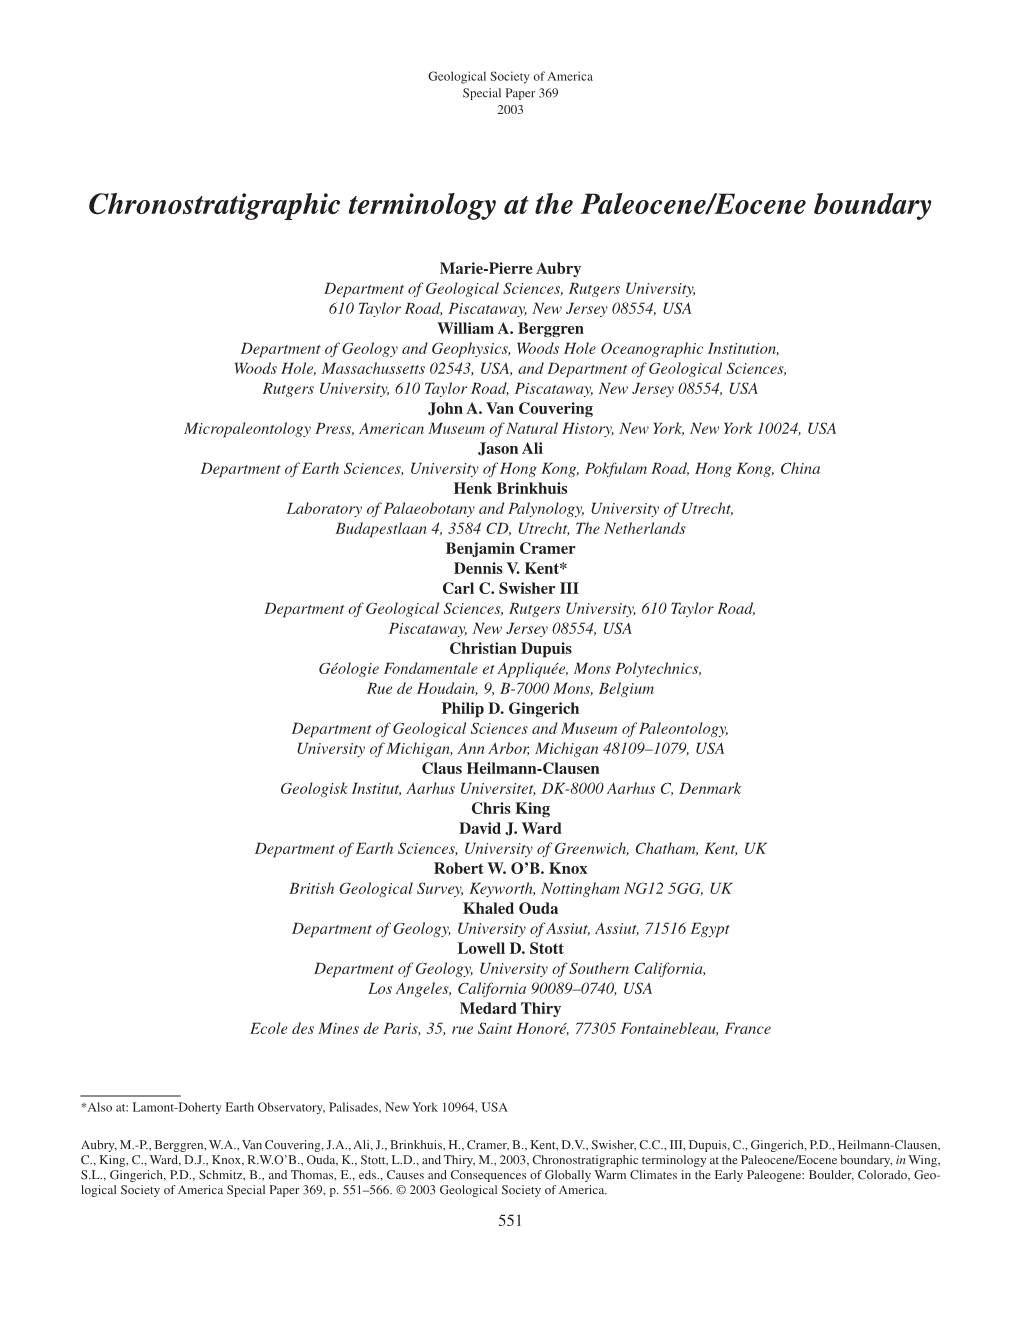 Chronostratigraphic Terminology at the Paleocene/Eocene Boundary